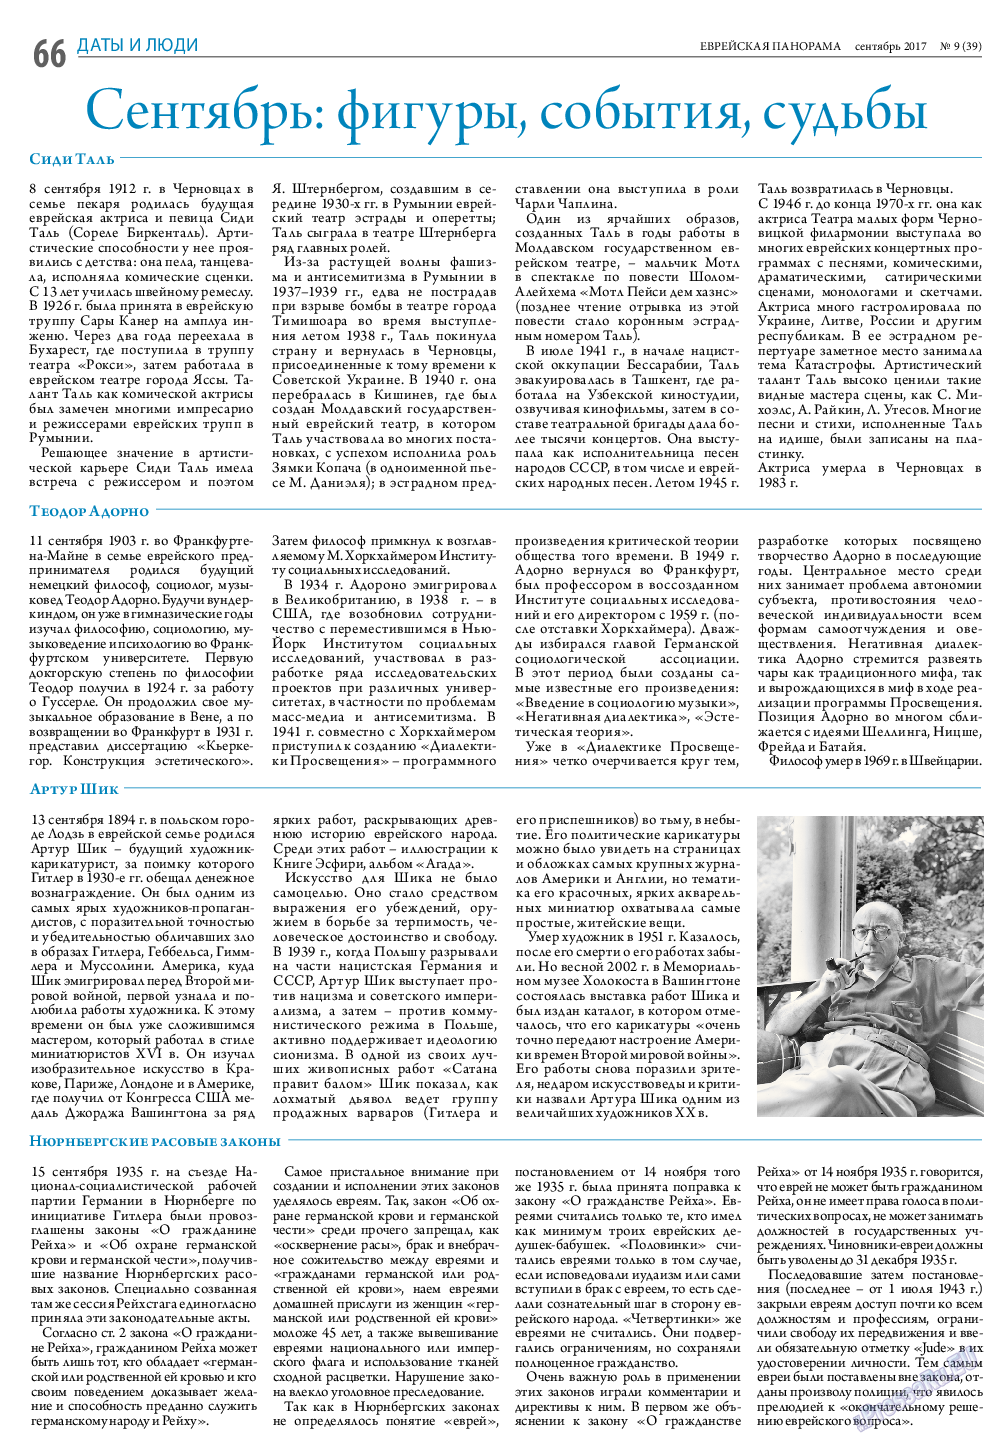 Еврейская панорама, газета. 2017 №9 стр.66